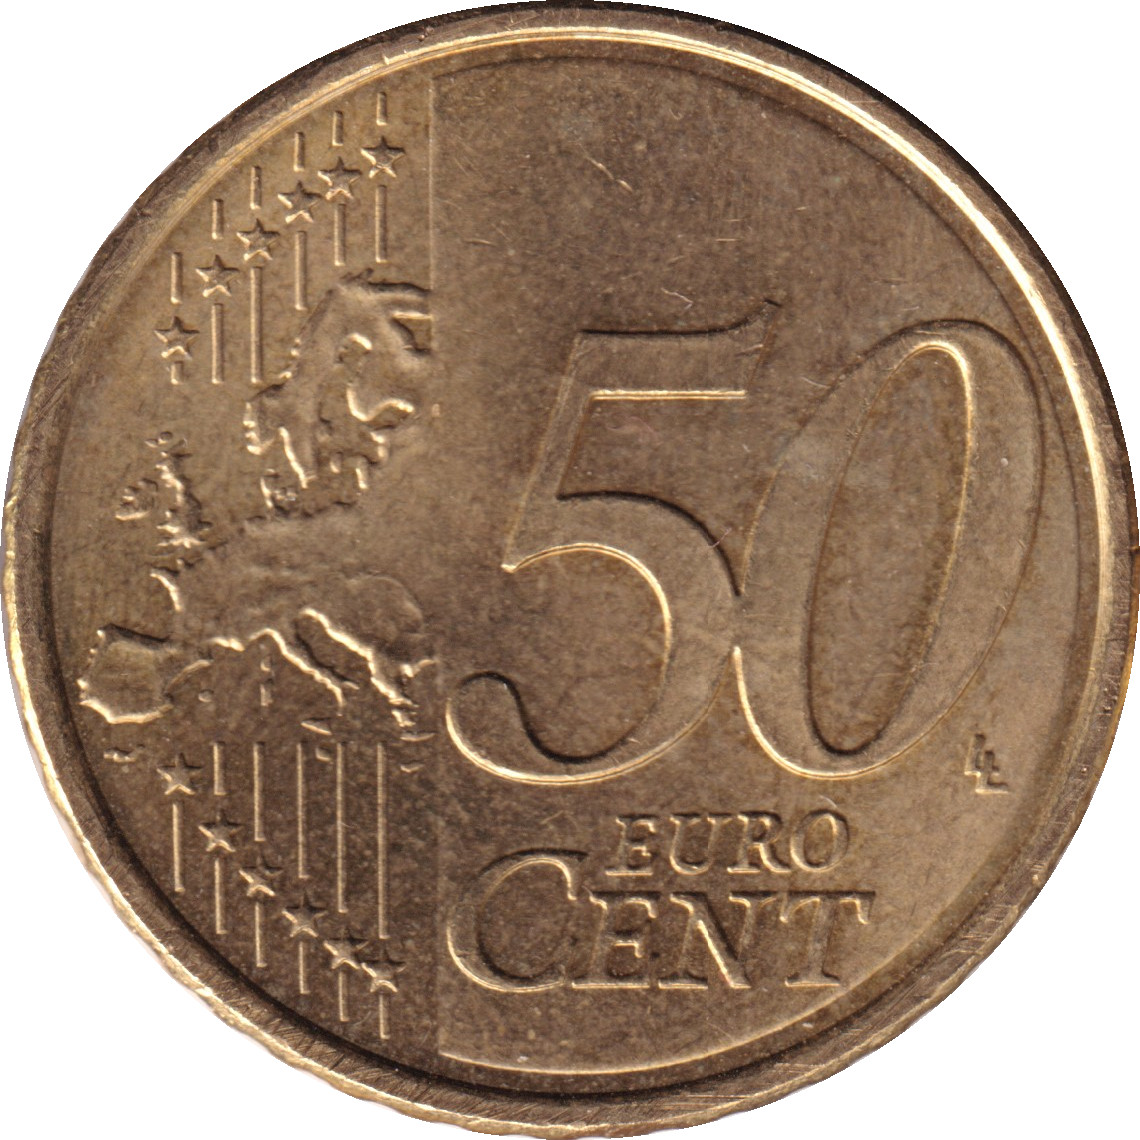 50 eurocents - Santa Coloma